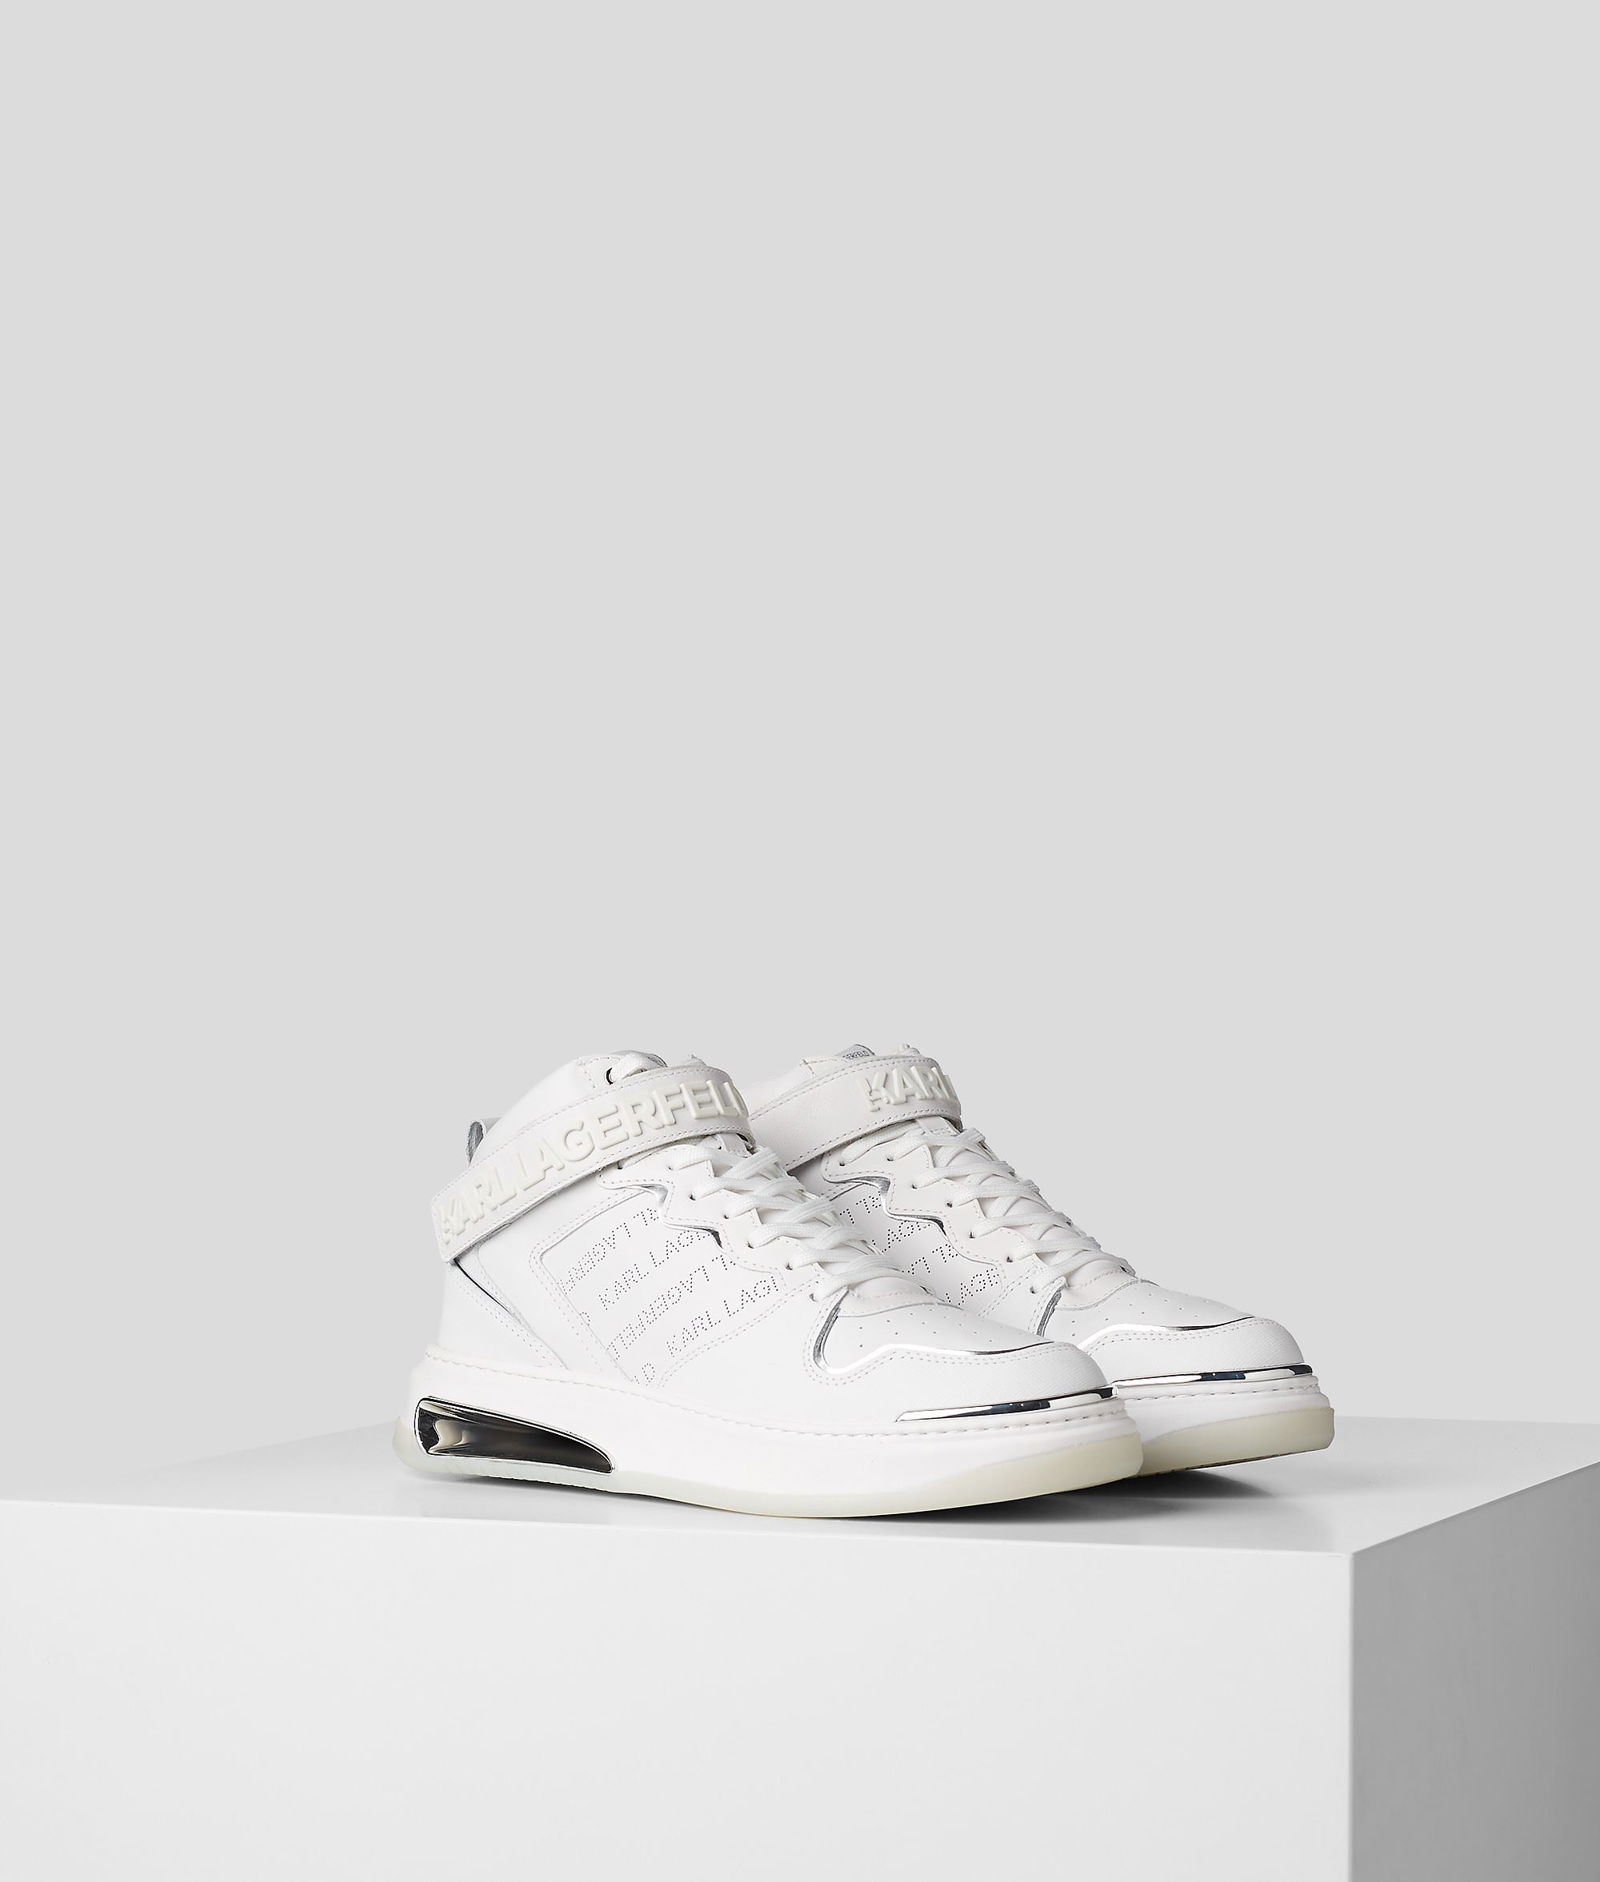 Tenis Karl Lagerfeld Precios - Elektro High Top Hombre Blancos